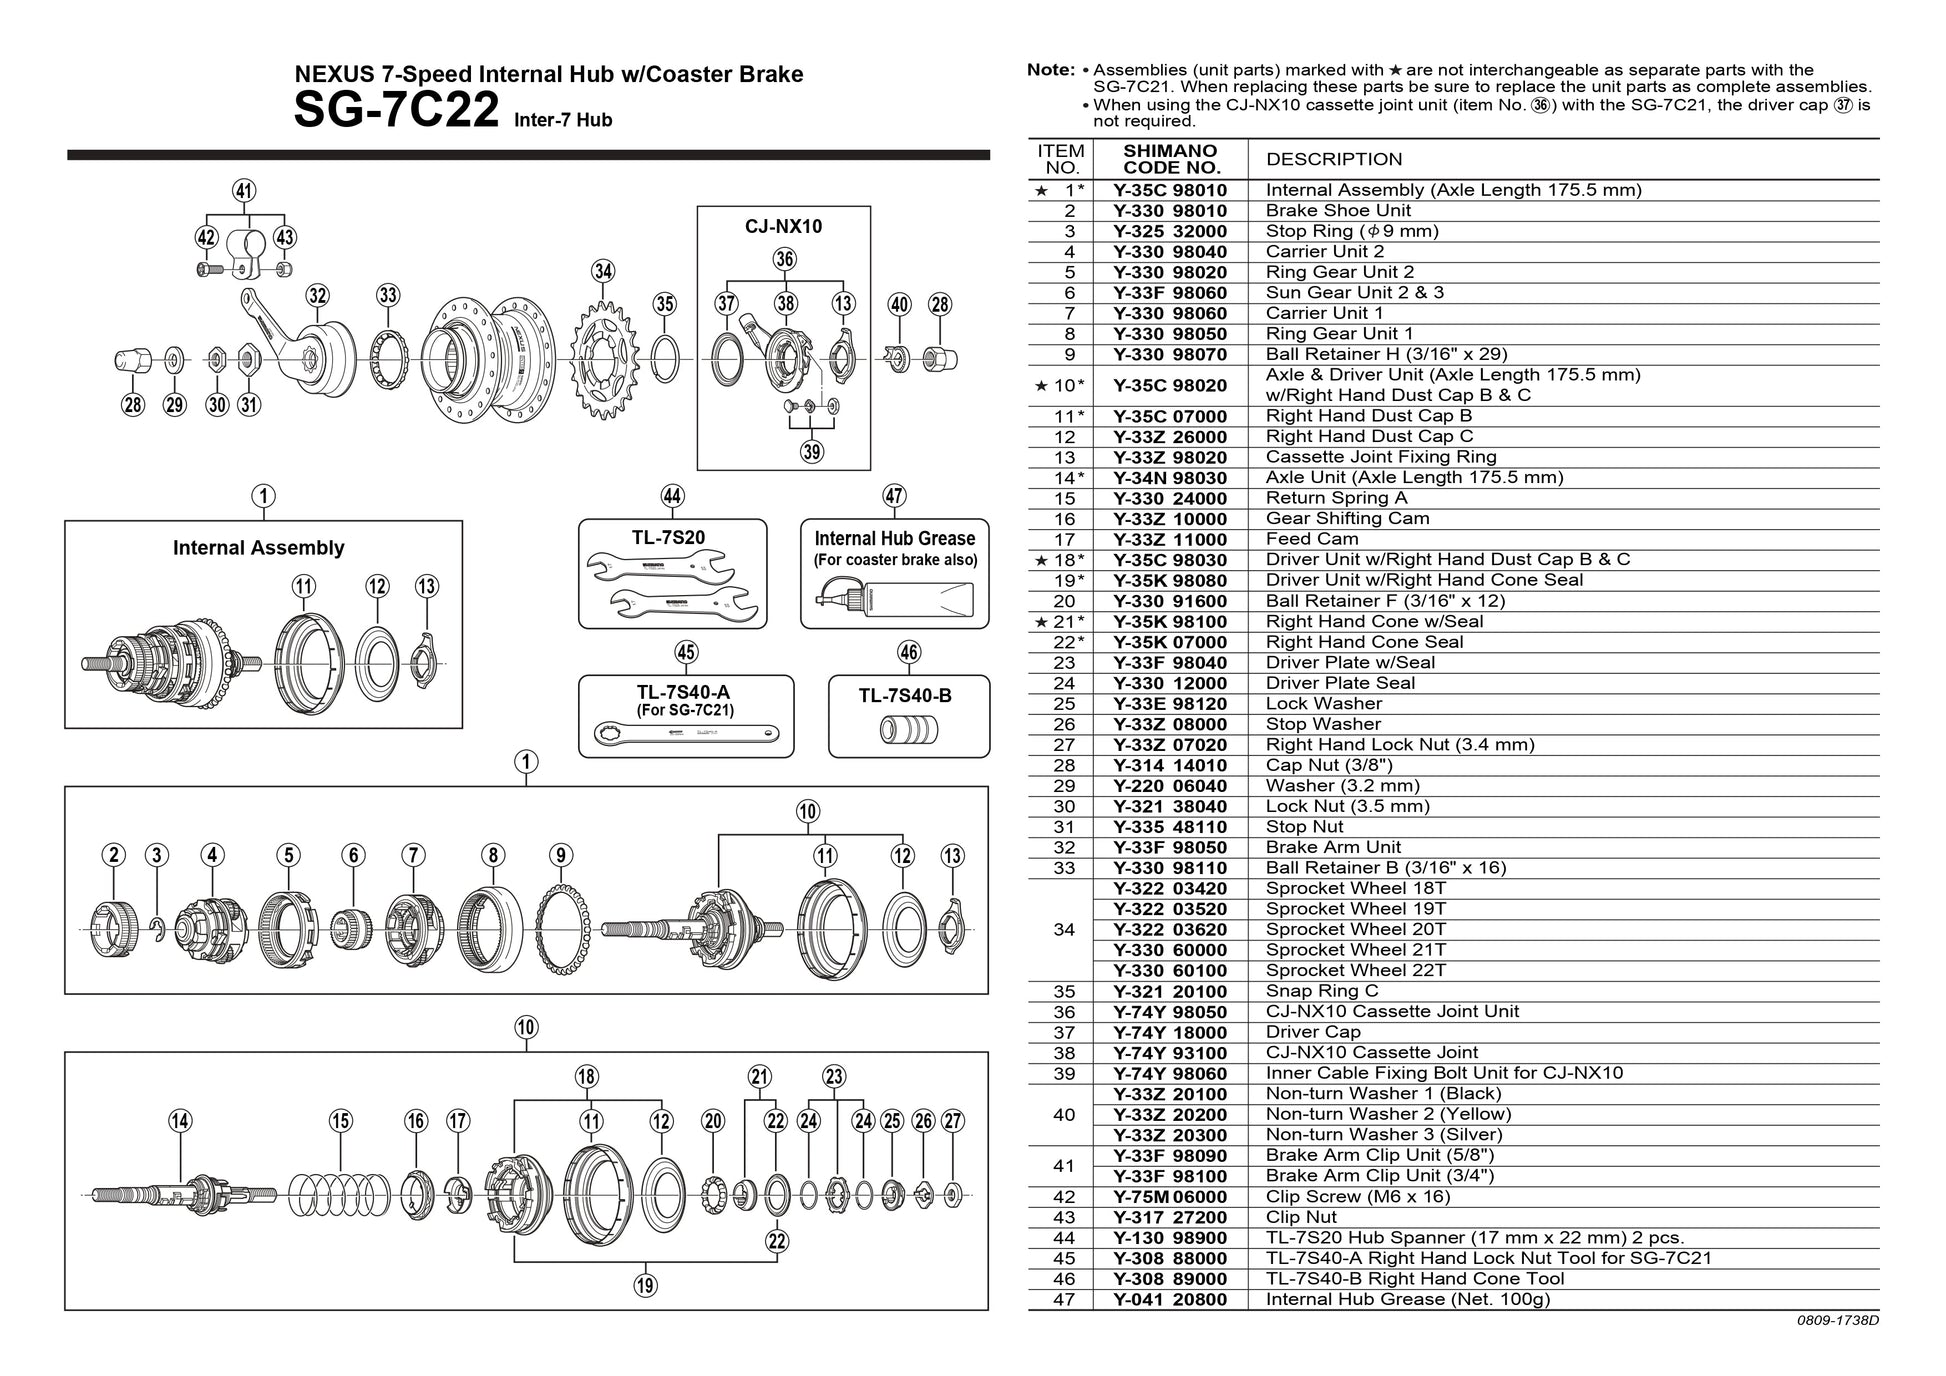 SHIMANO Nexus SG-7C21 Hub 7-Speed Brake Arm Clip Unit - 5/8" - Y33F98090-Pit Crew Cycles